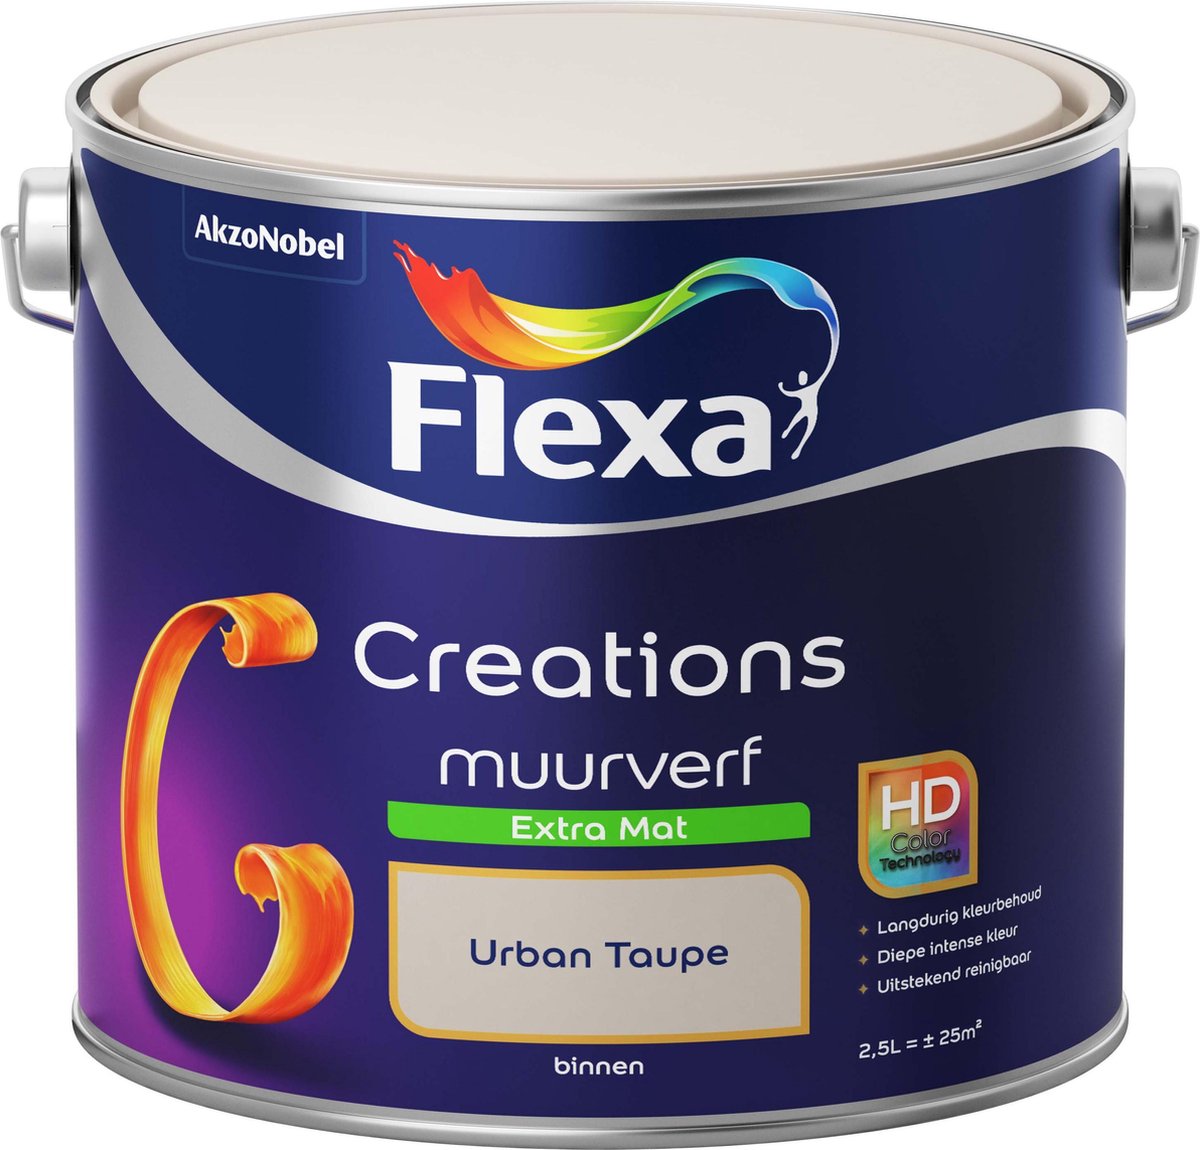 Flexa Creations - Muurverf Extra Mat - Urban Taupe - 2,5 liter - Flexa